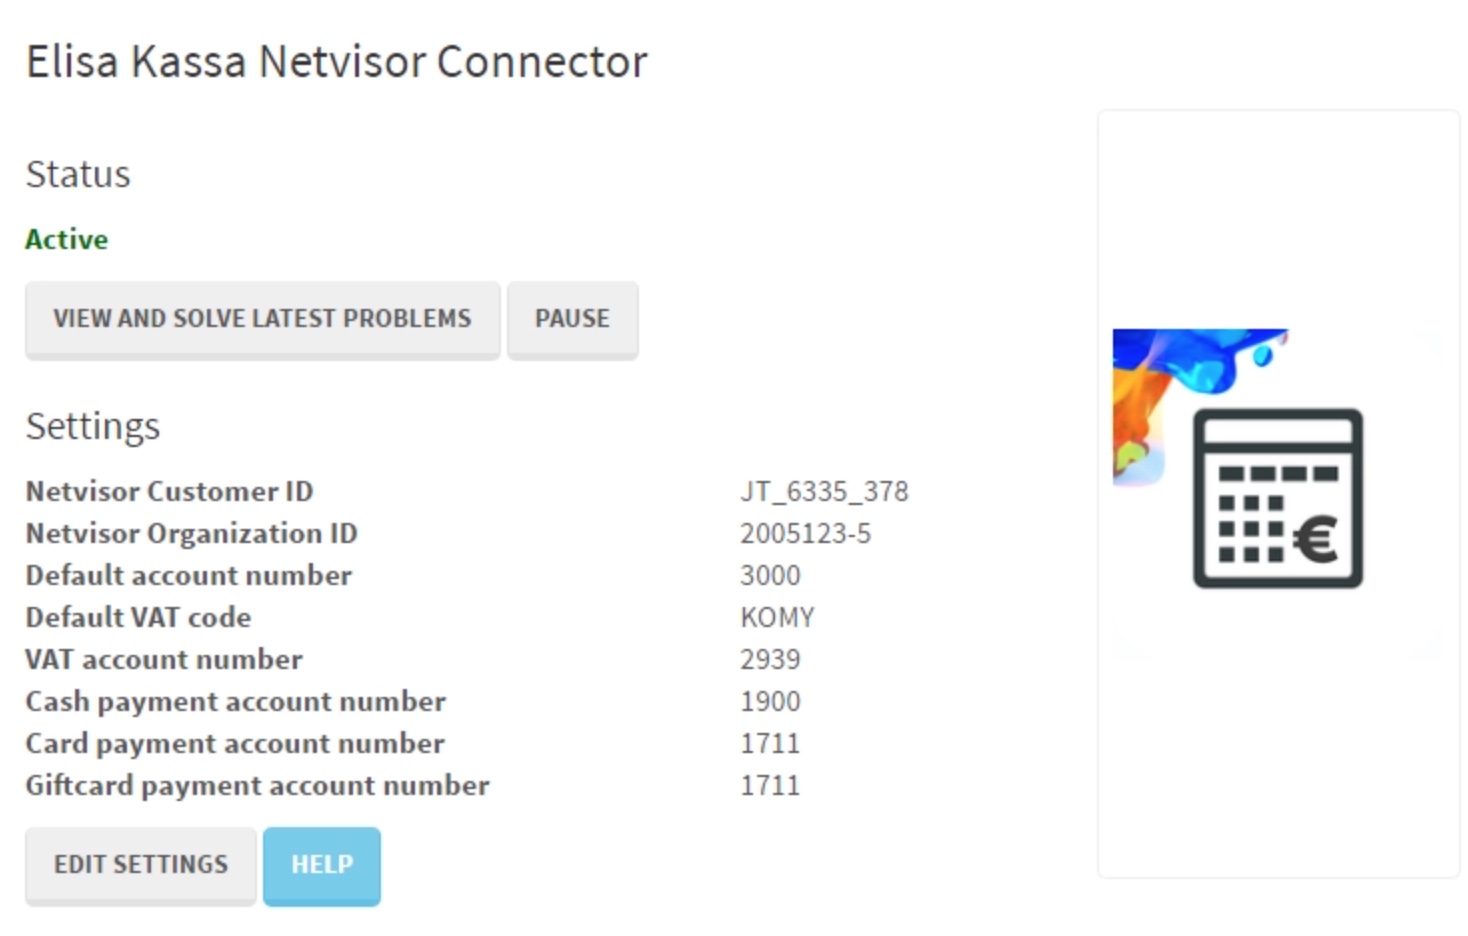 Netvisor Connector blog post cover image